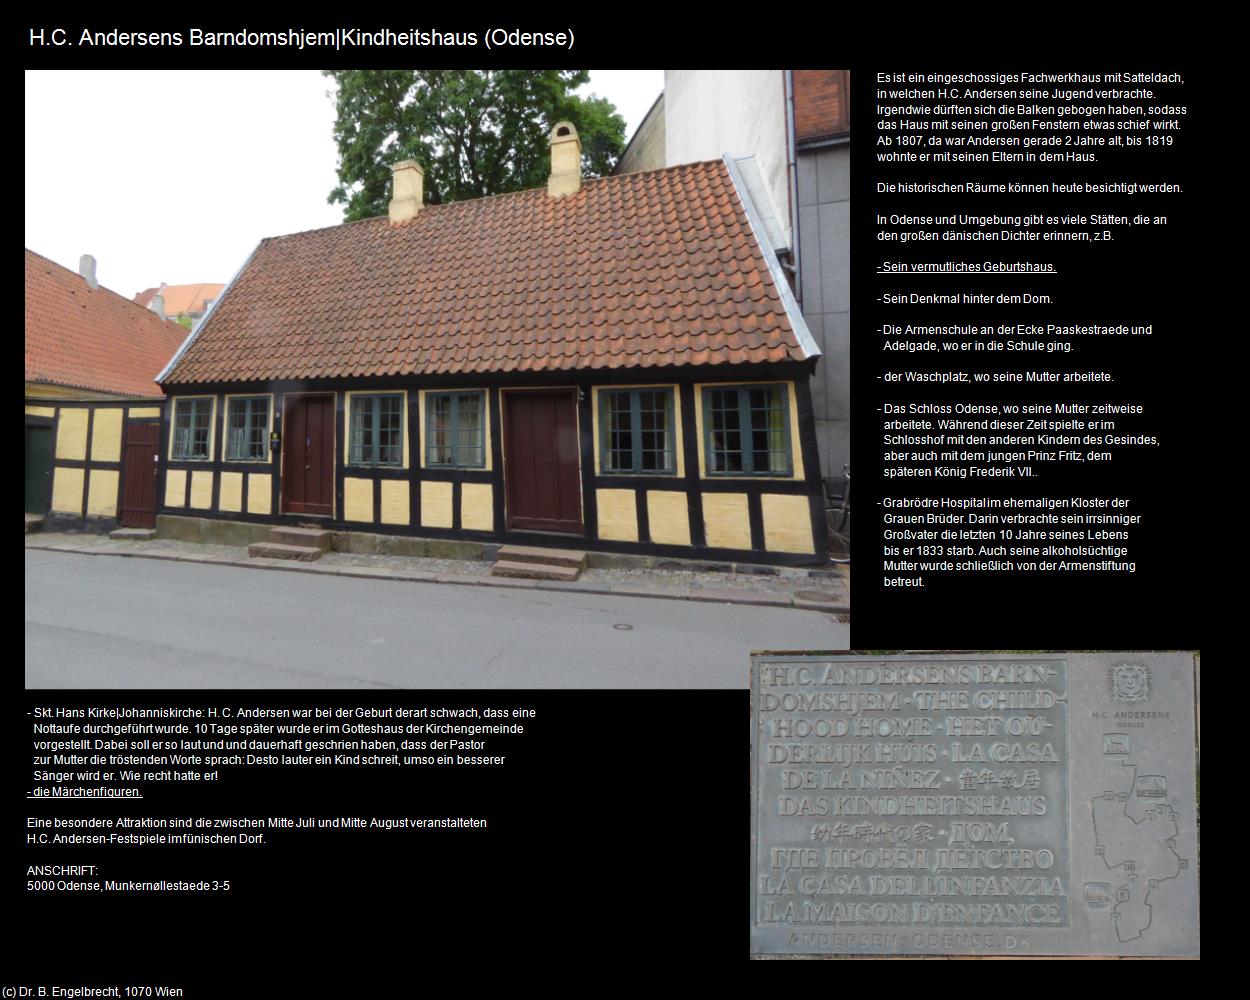 H.C. Andersens Barndomshjem (Odense) in Kulturatlas-REISE nach NORWEGEN(c)B.Engelbrecht